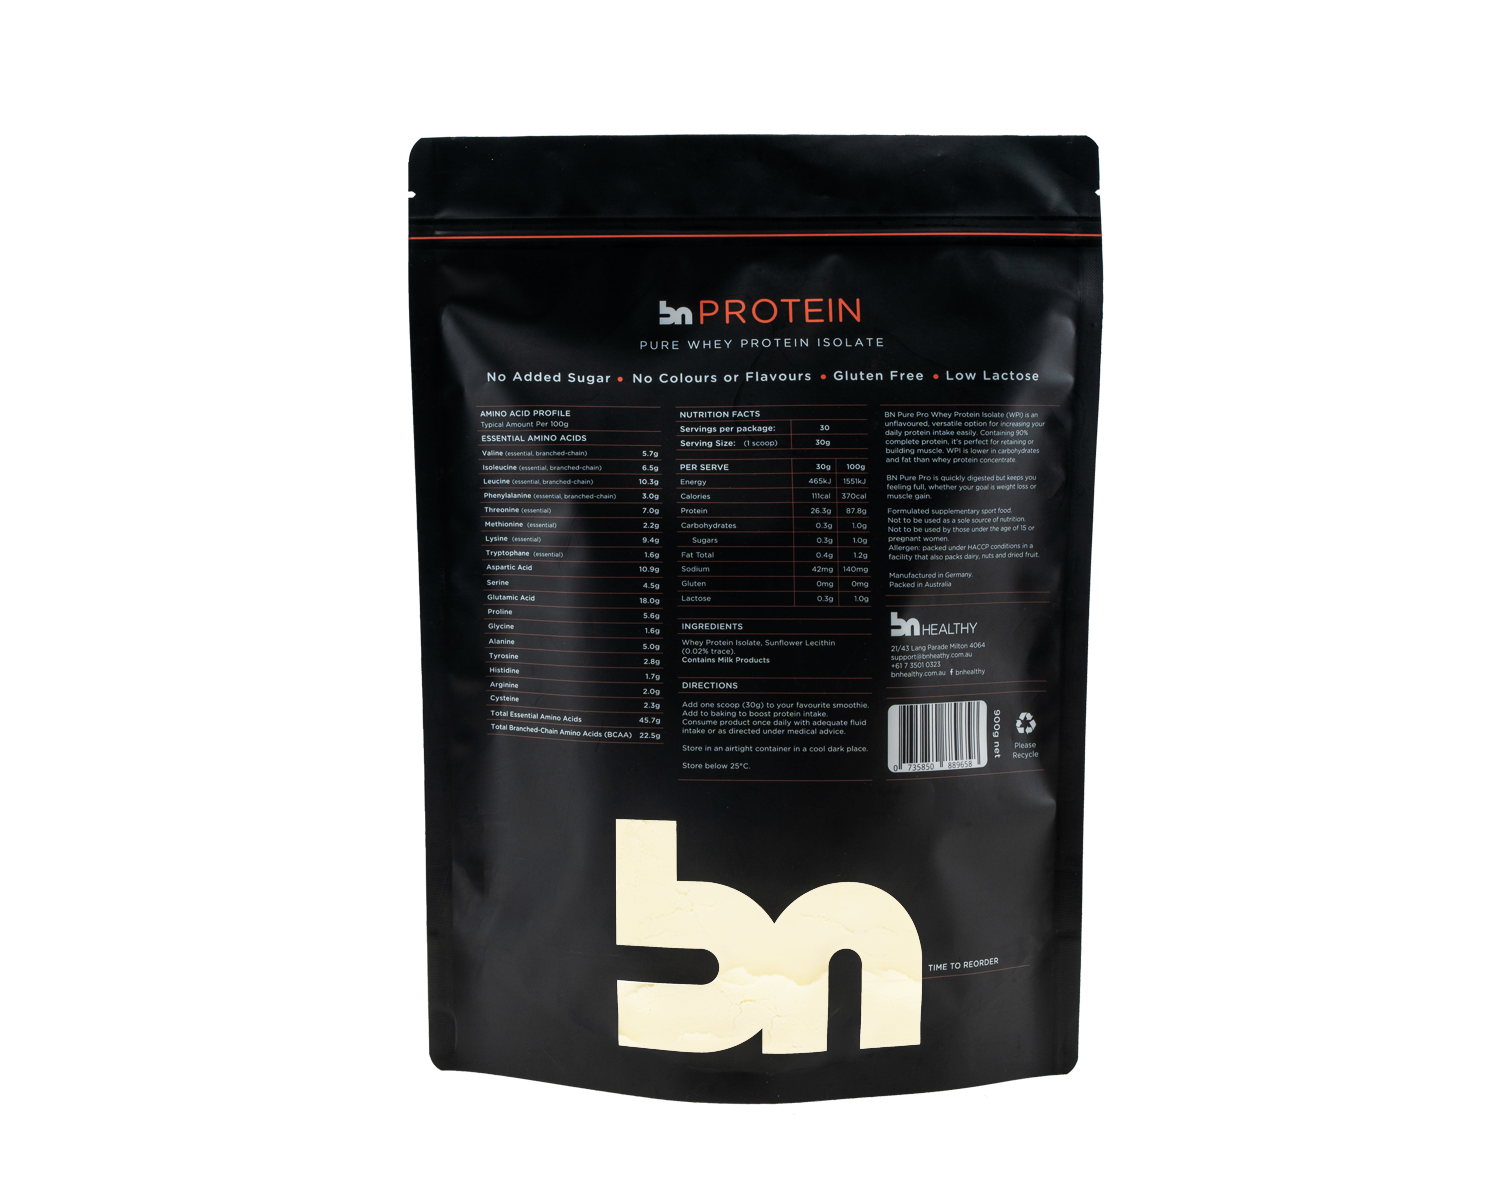 BN Protein - Whey Protein Isolate Powder